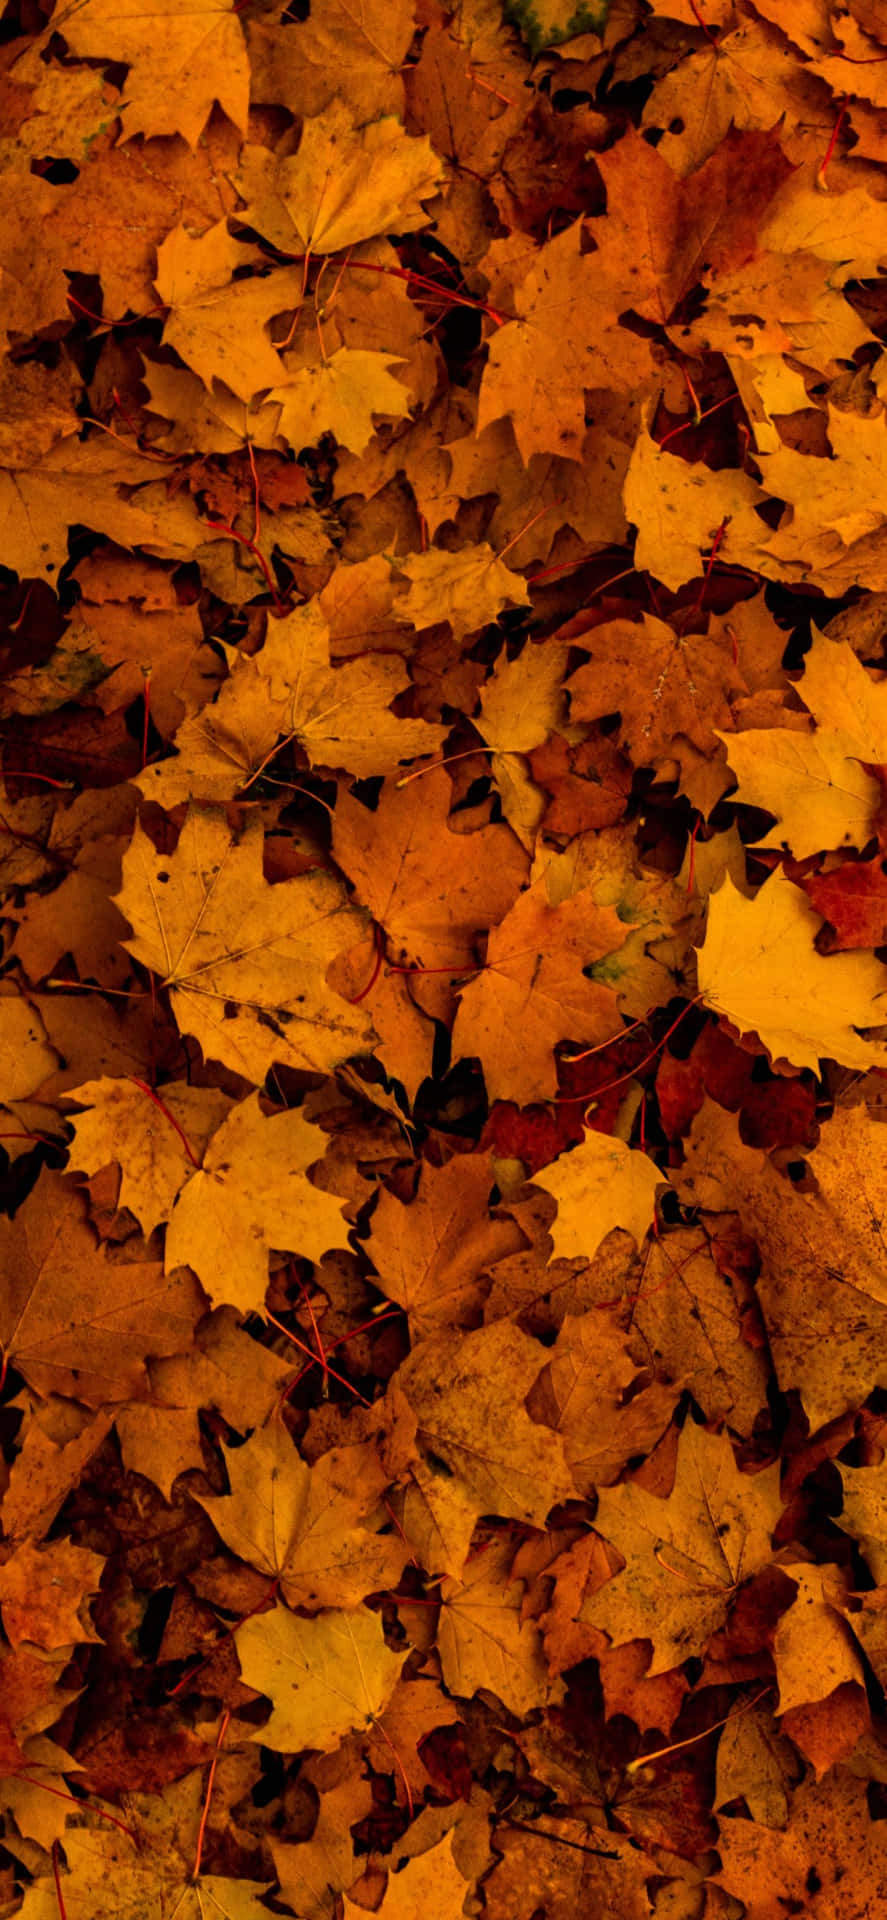 Fallen Leaves on Ground Wallpaper